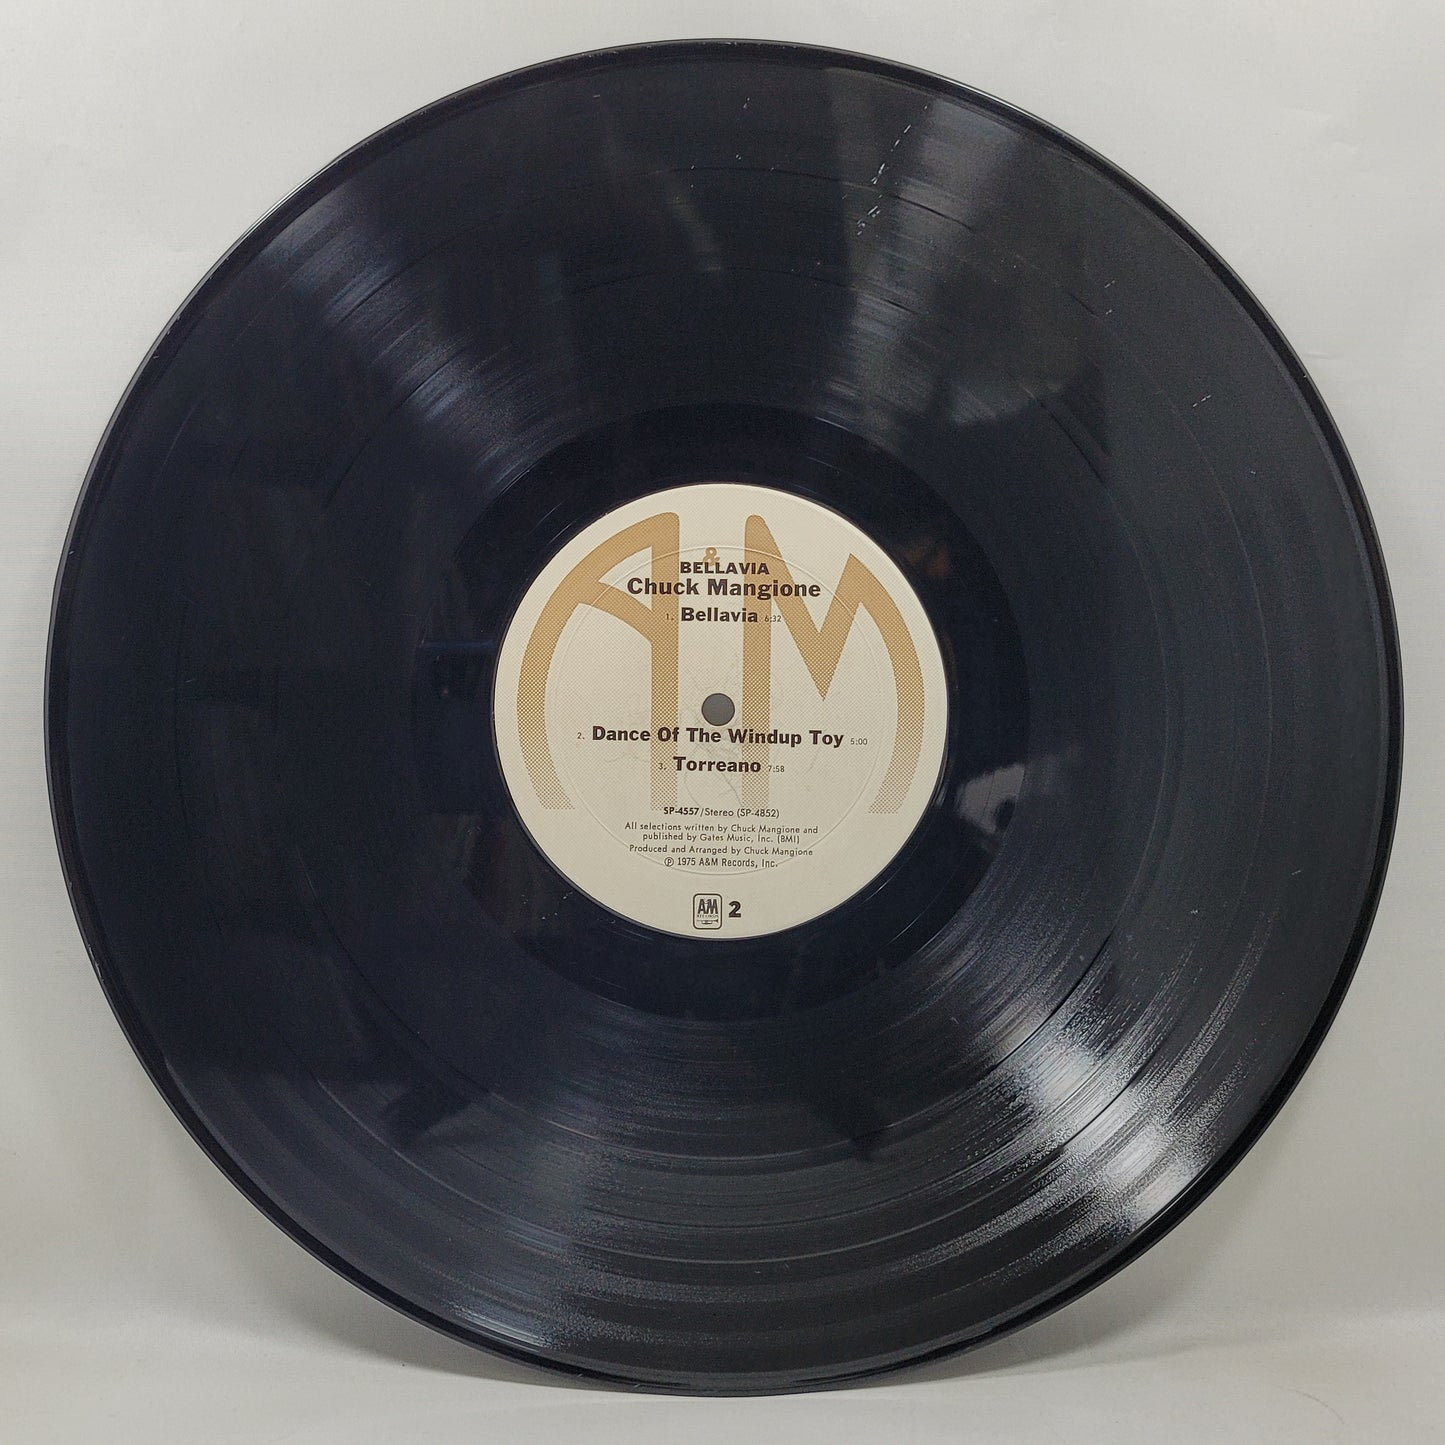 Chuck Mangione - Bellevai [Vinyl Record LP]